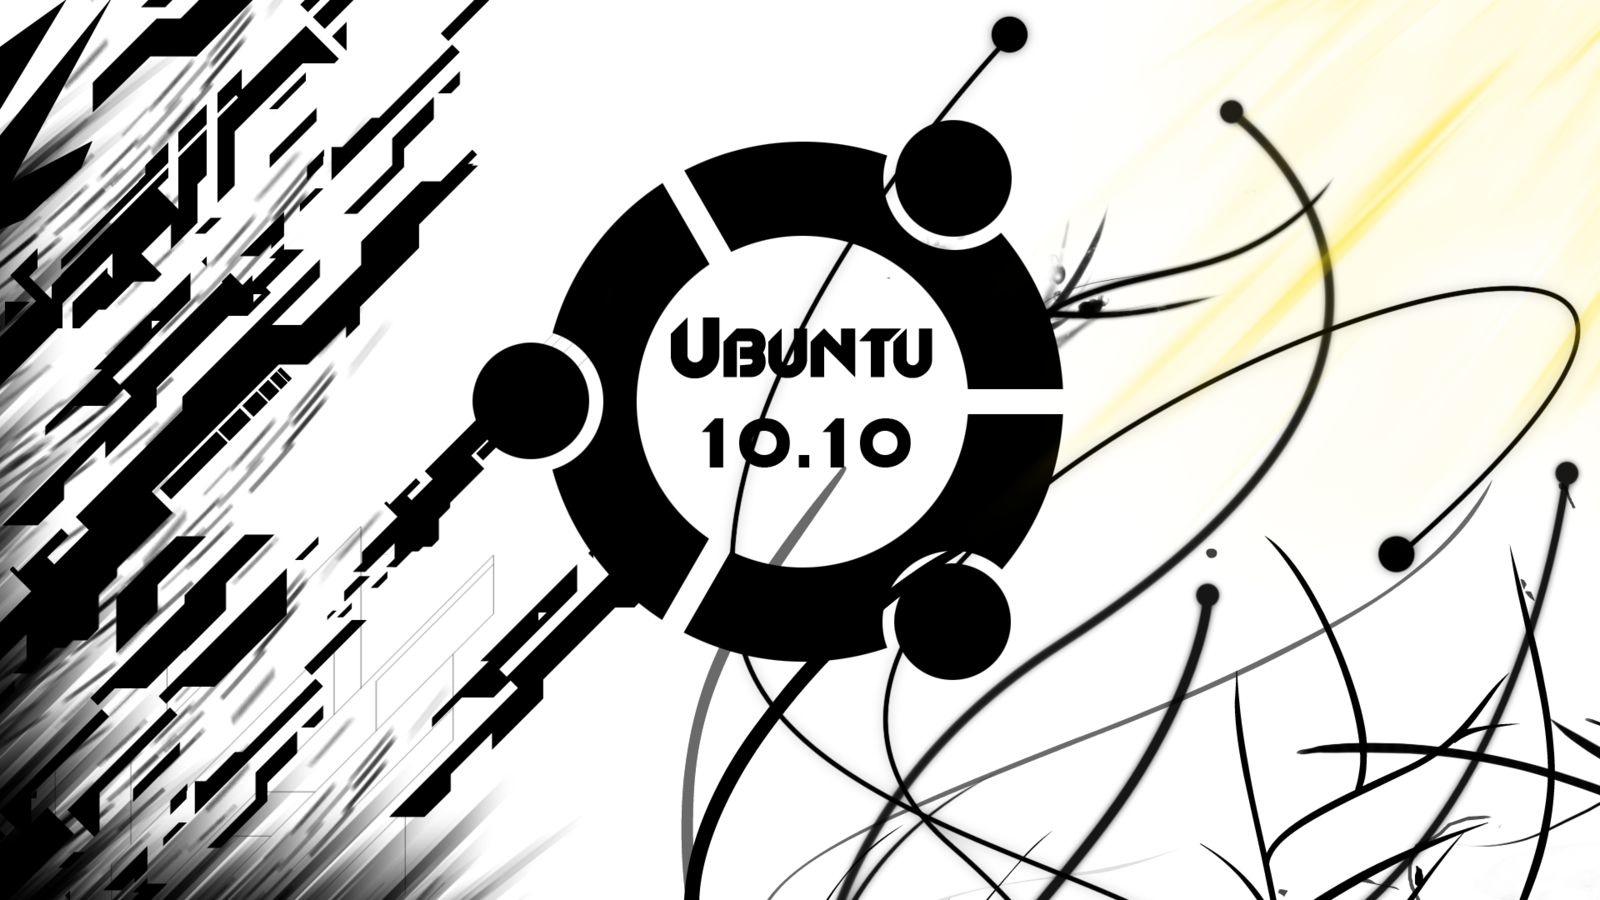 ubuntu nature vs tech by dubbya-d35x96k.png